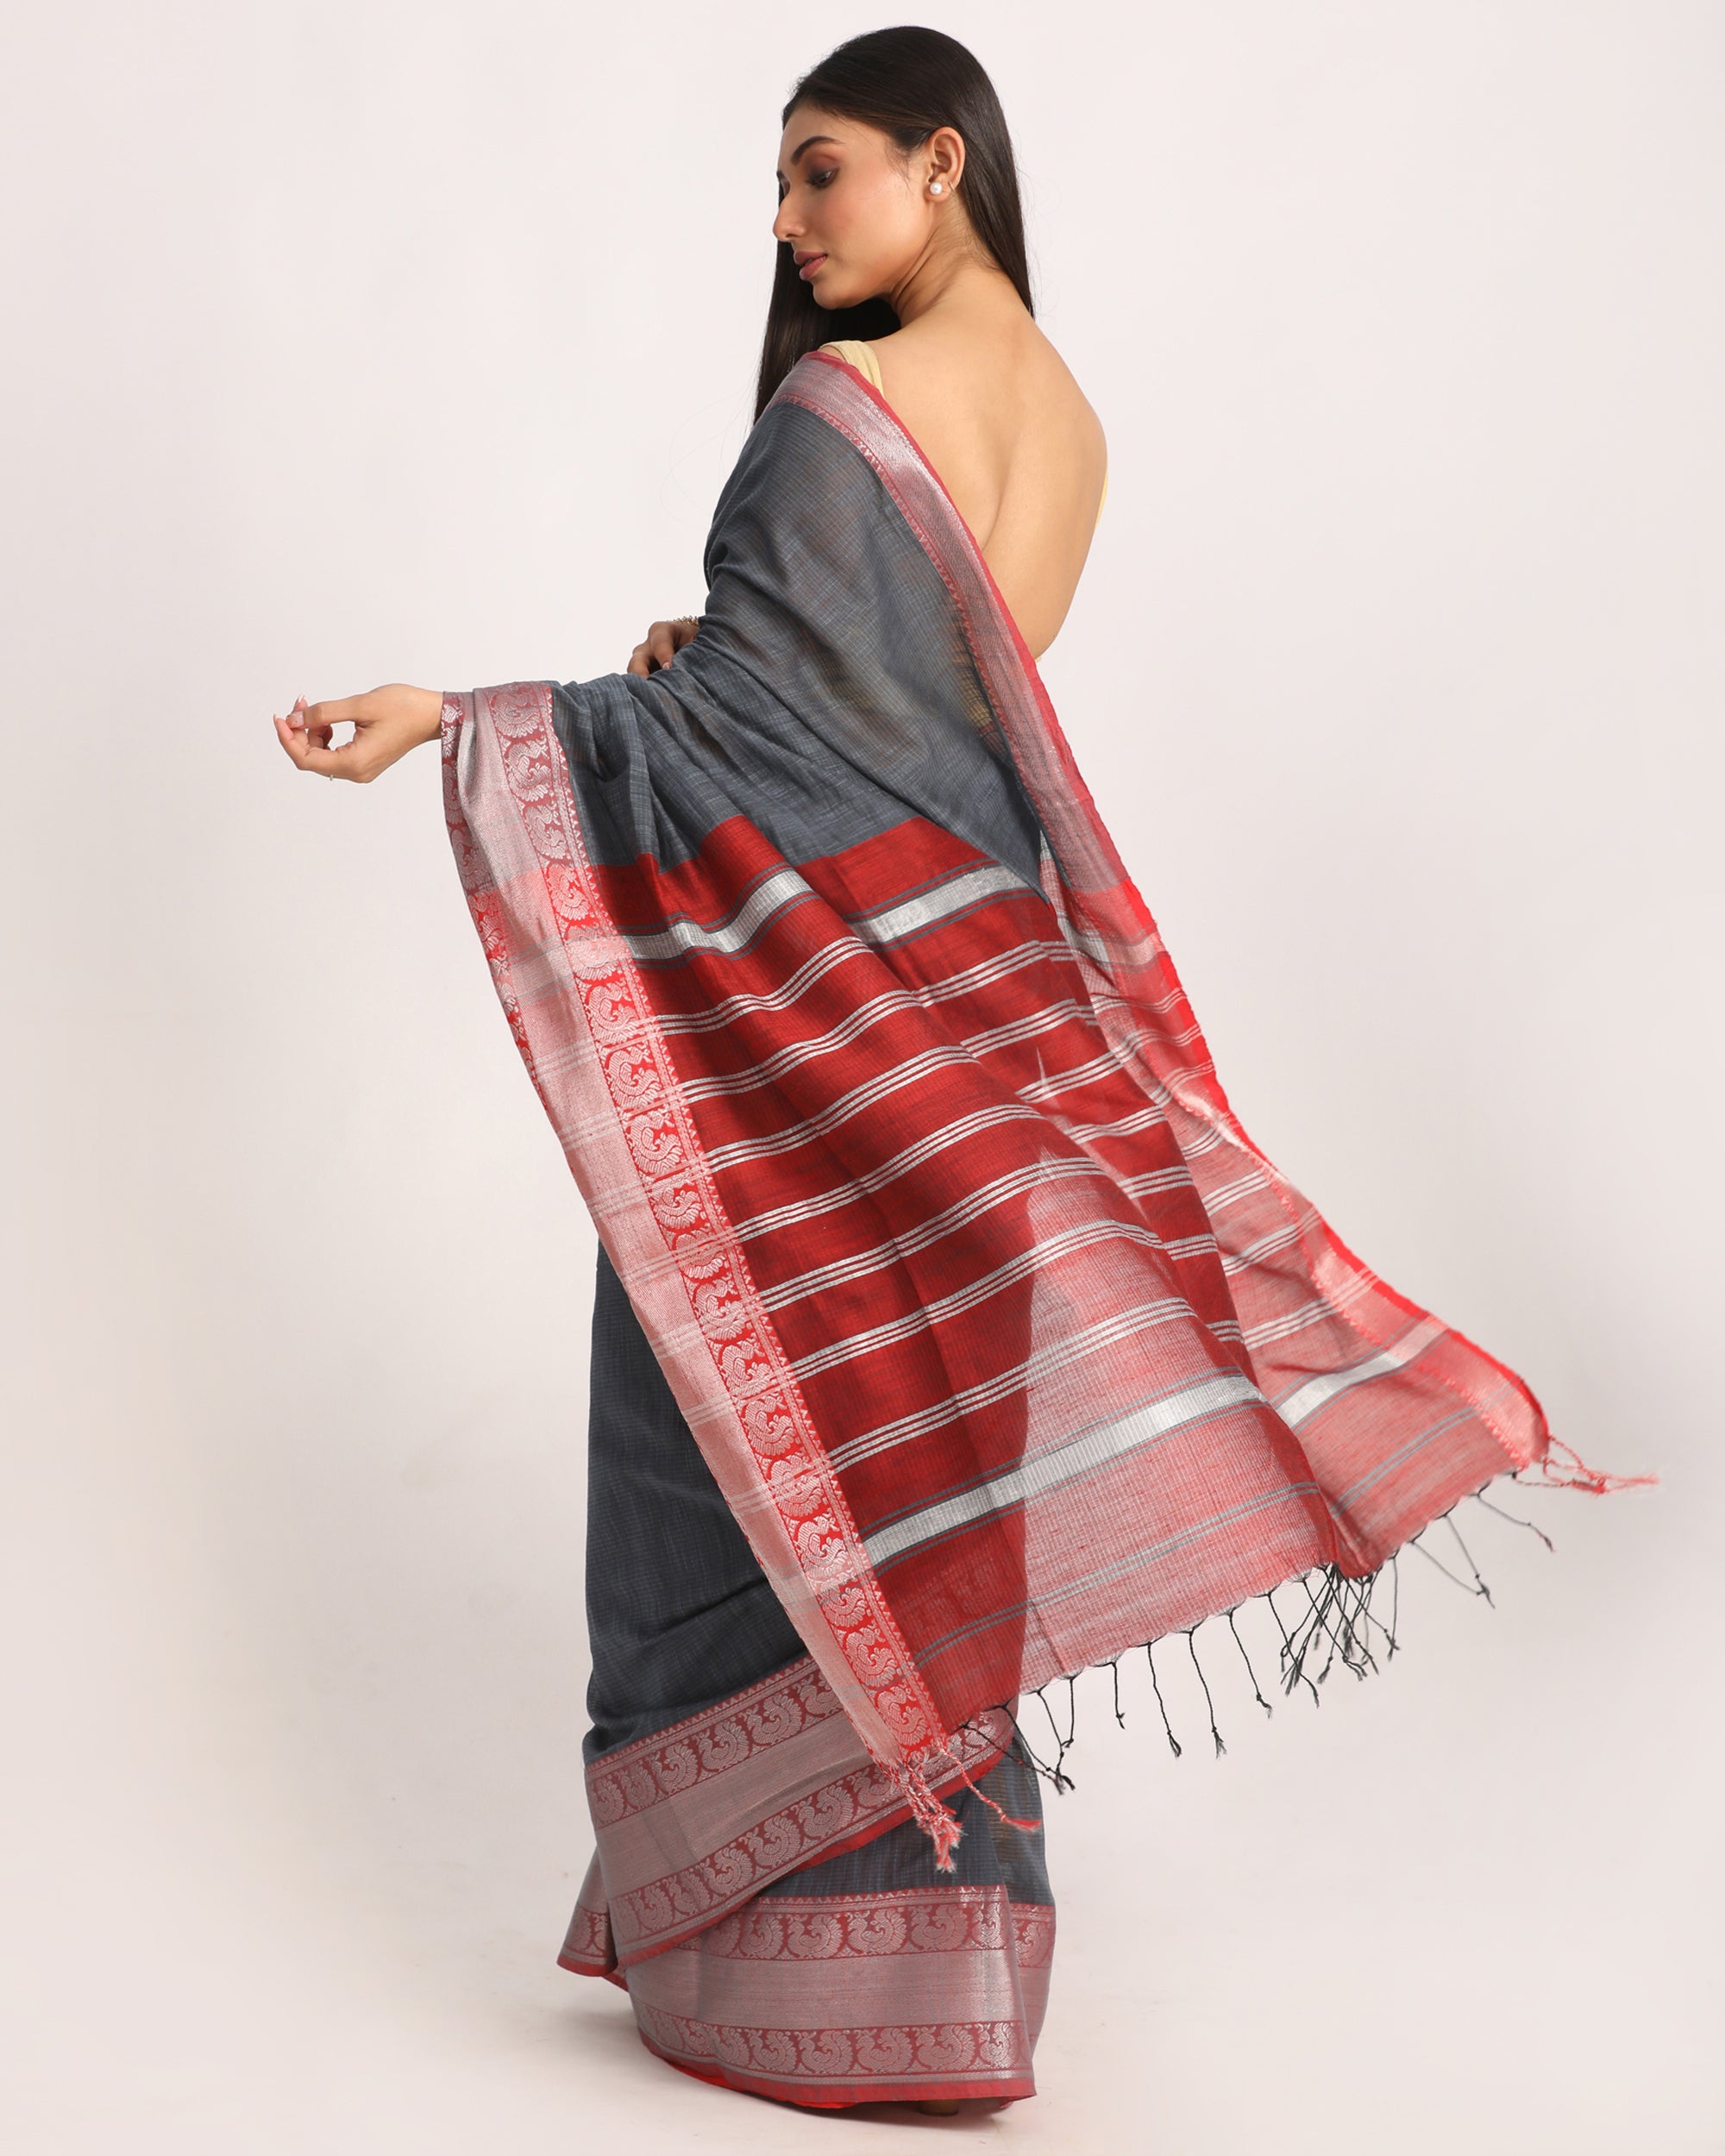 Women's Deep Grey Handloom Cotton Tangail Saree - Angoshobha